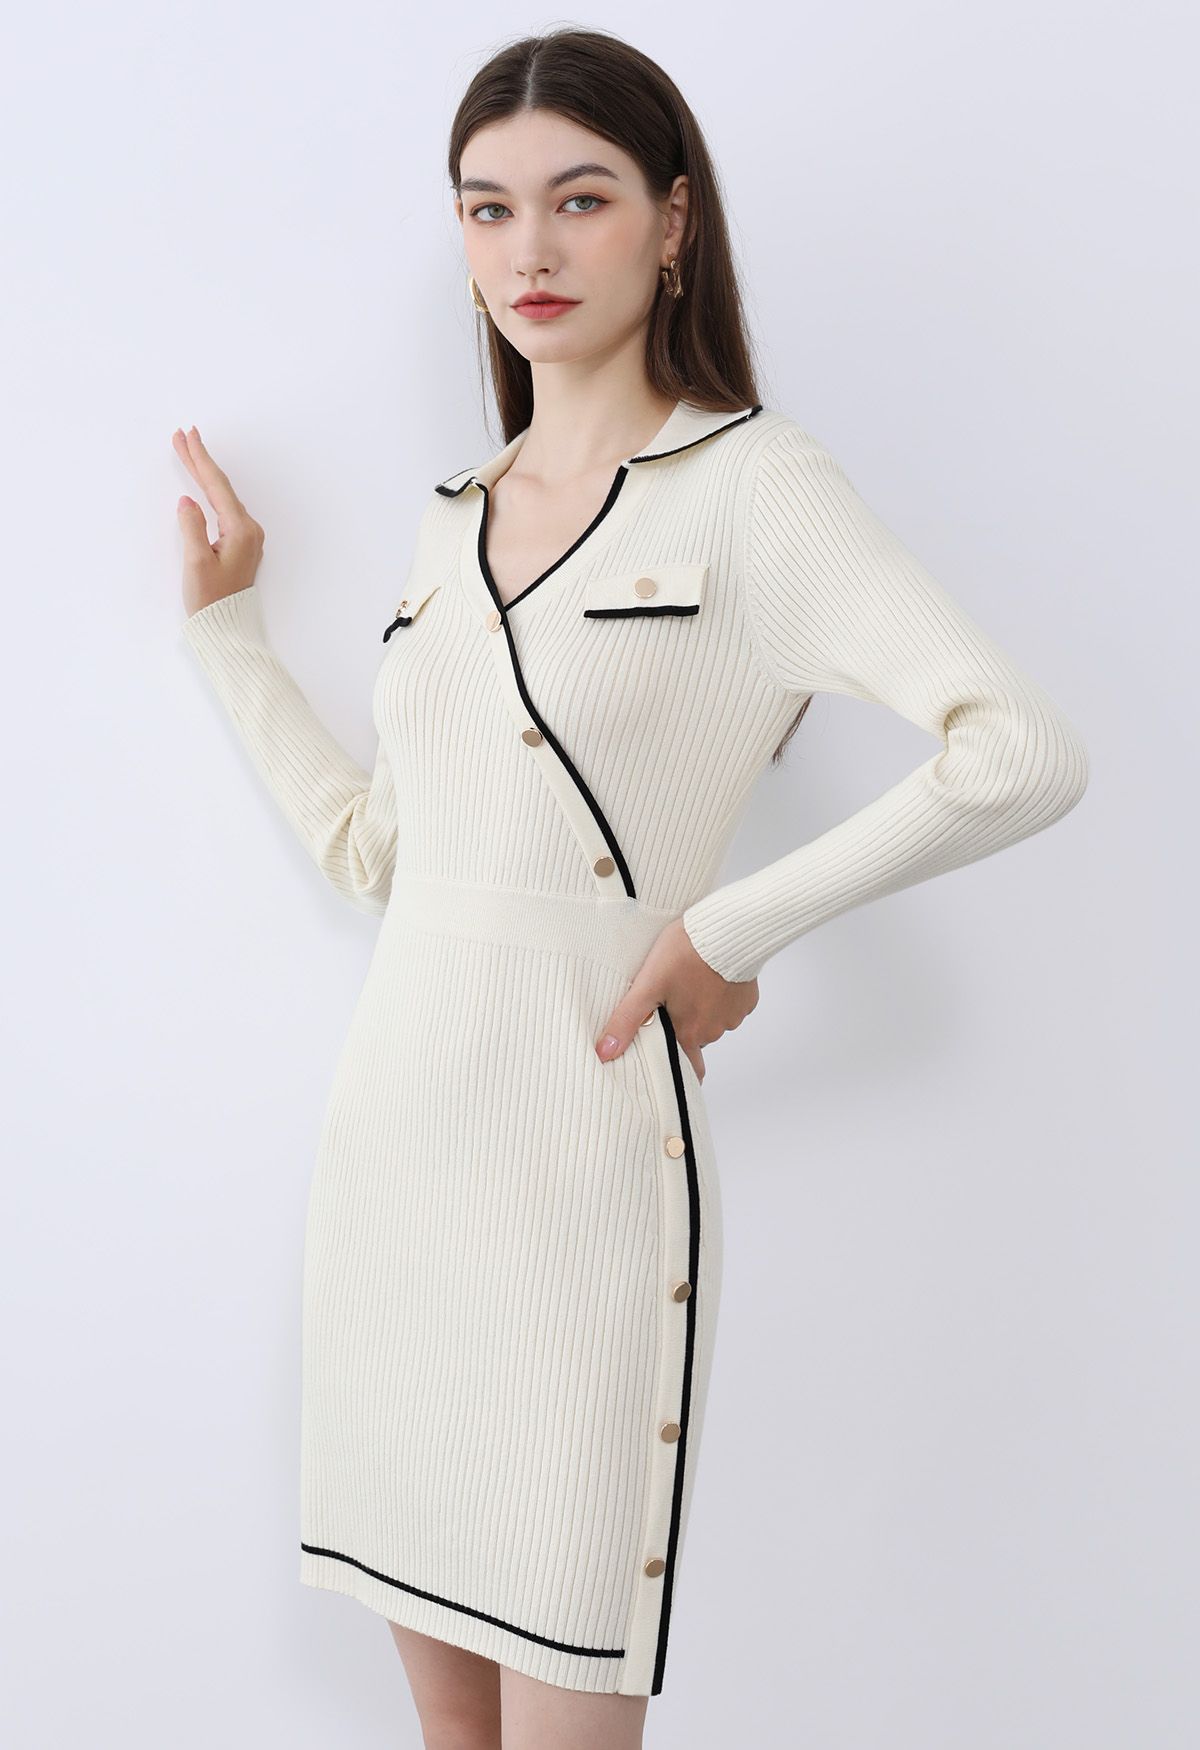 Collared Knit Dress - White - Ladies